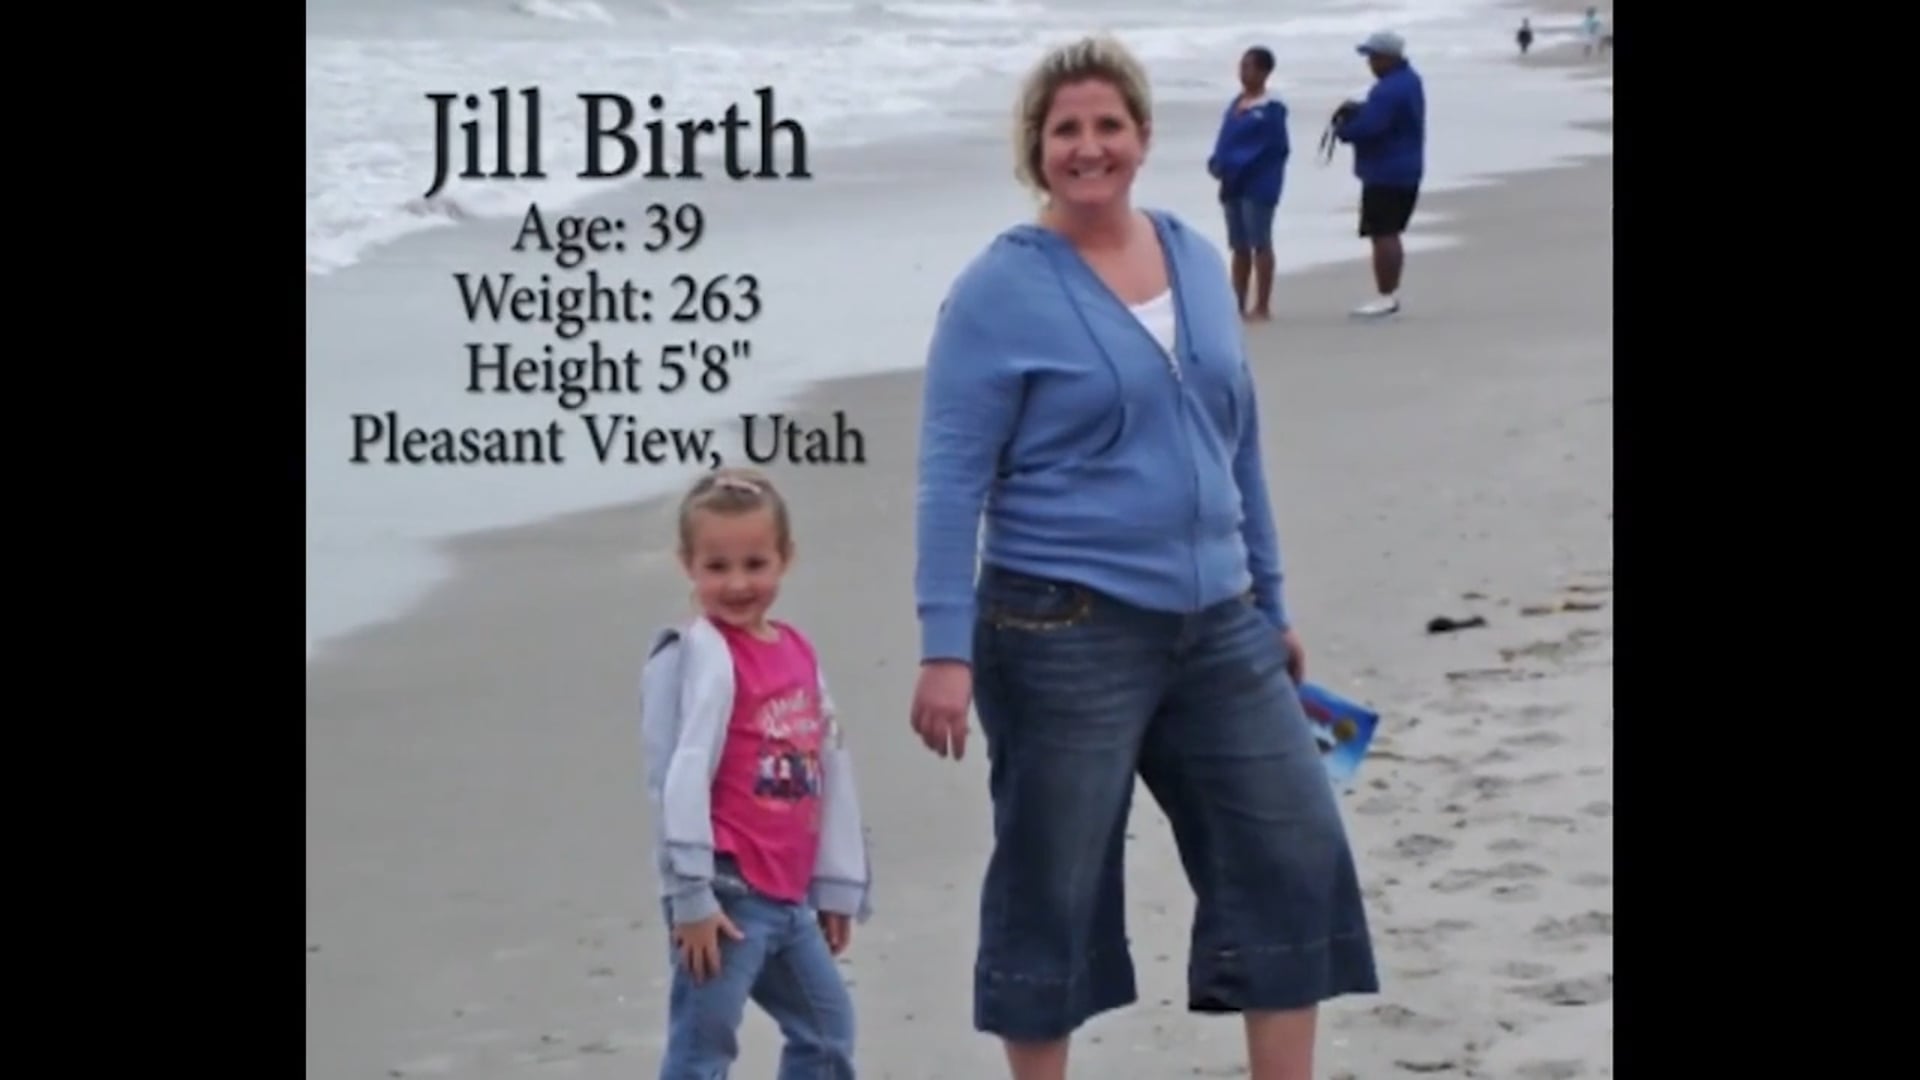 5 - Jill Birth's Weight Loss Transformation